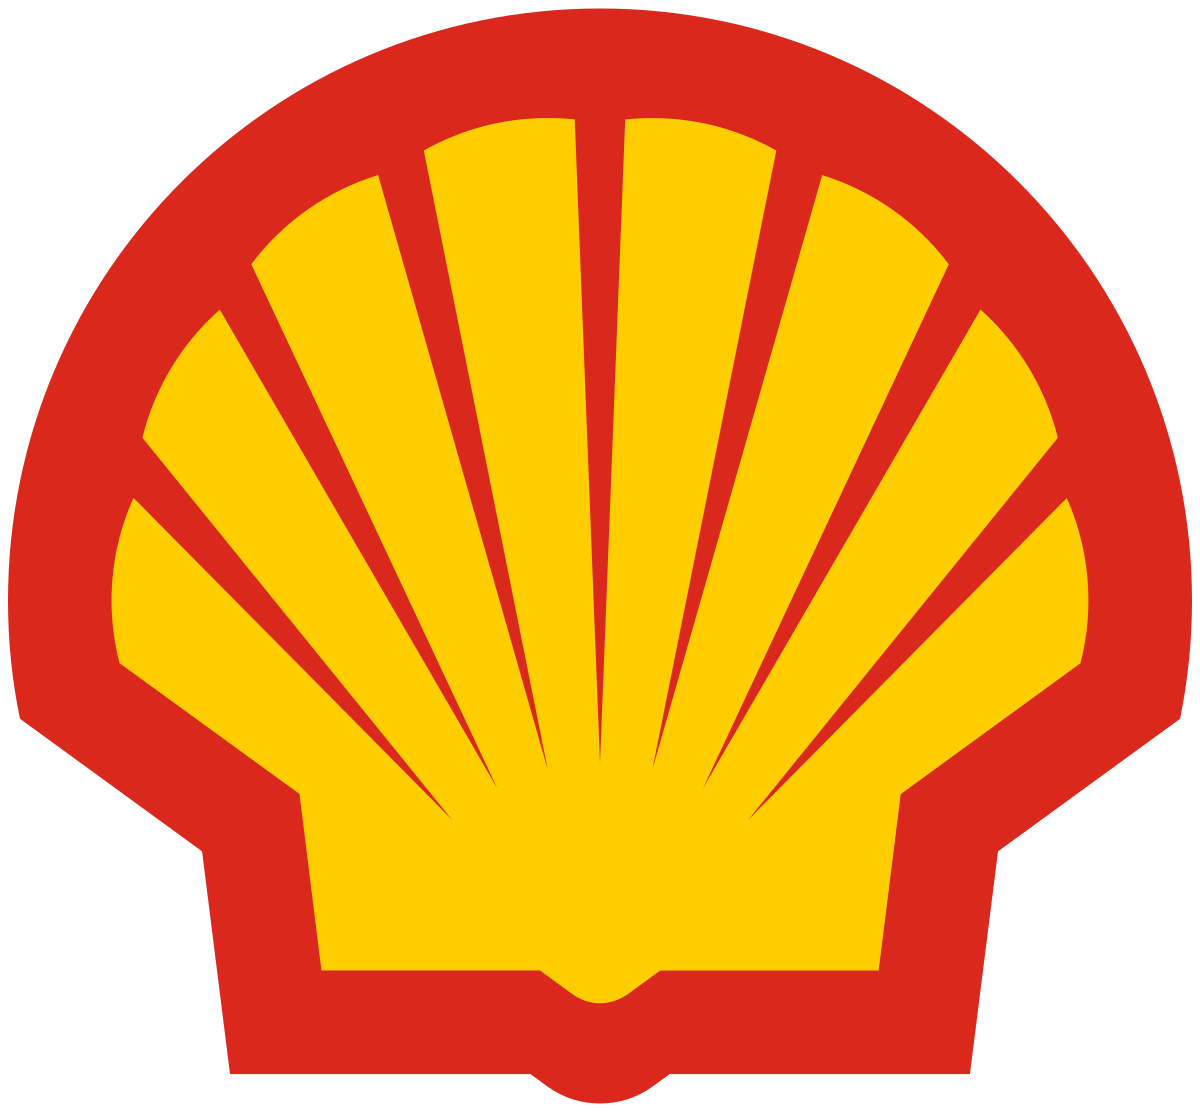 Shell v-Power логотип